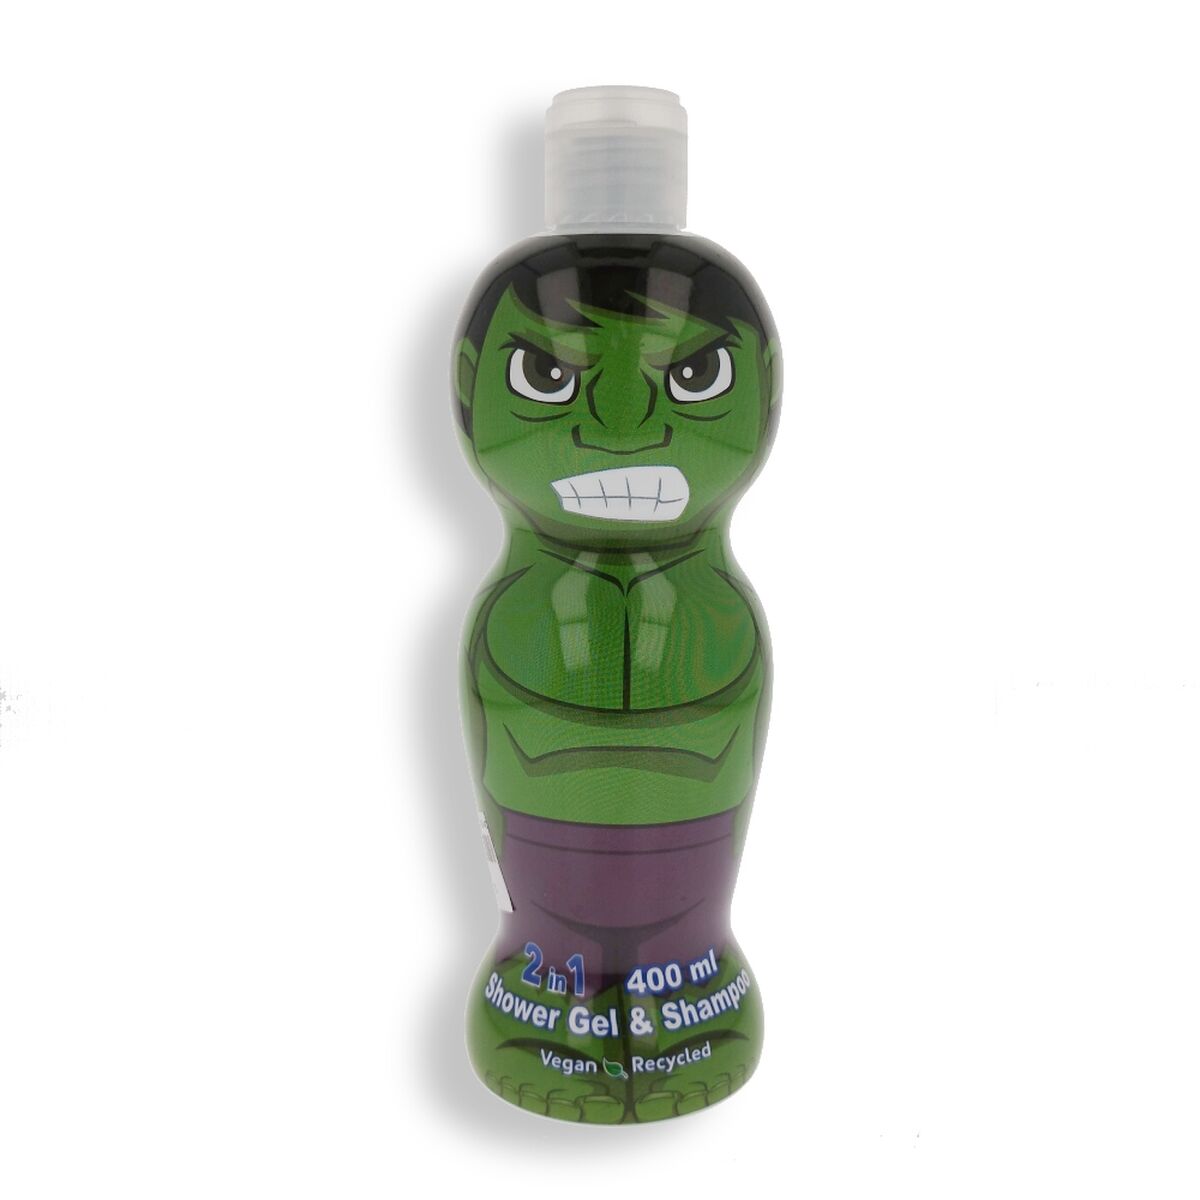 2-in-1 geeli ja shampoo Air-Val Hulk 400 ml